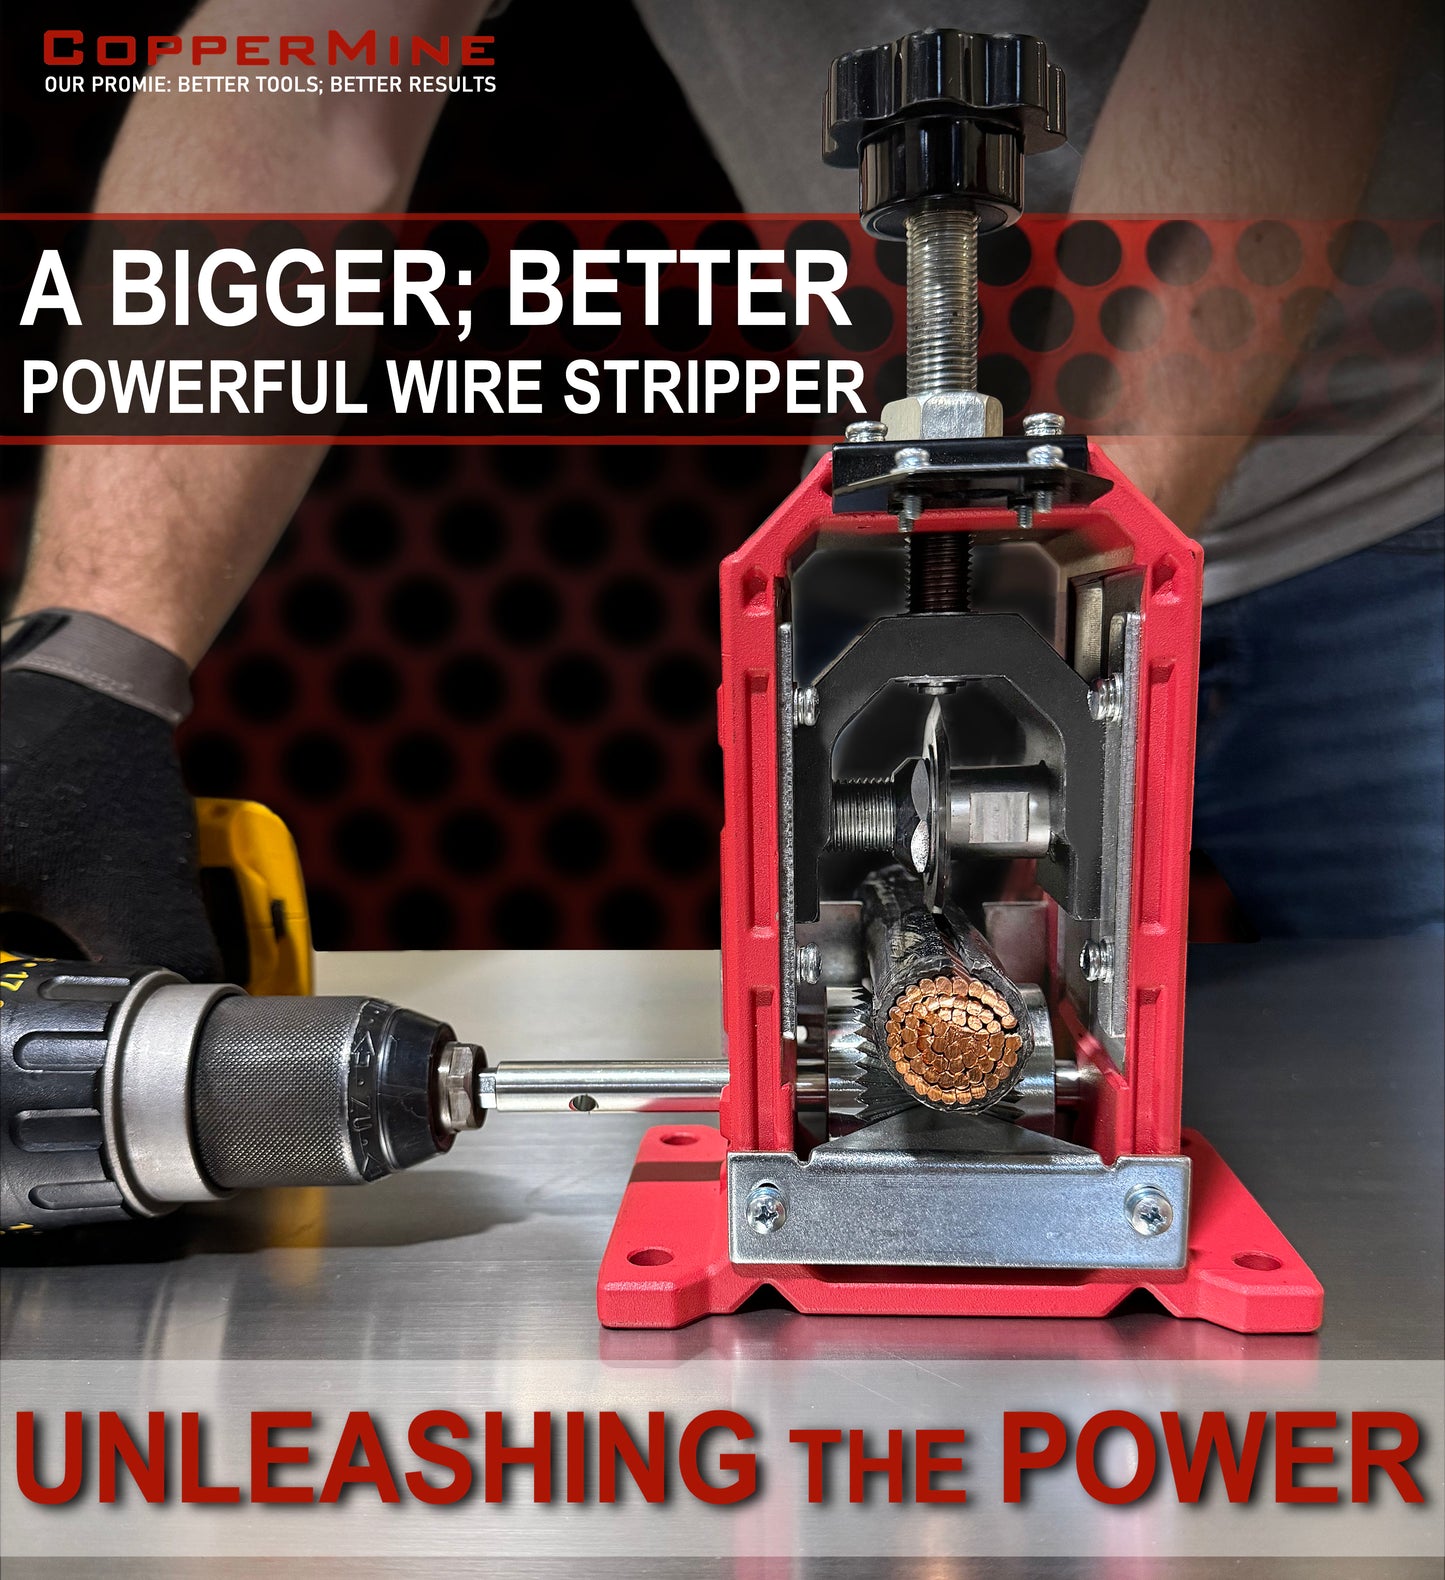 Powerful manual wire stripper, copper wire stripping machine, CT-302 CopperMine, drill operated wire stripper